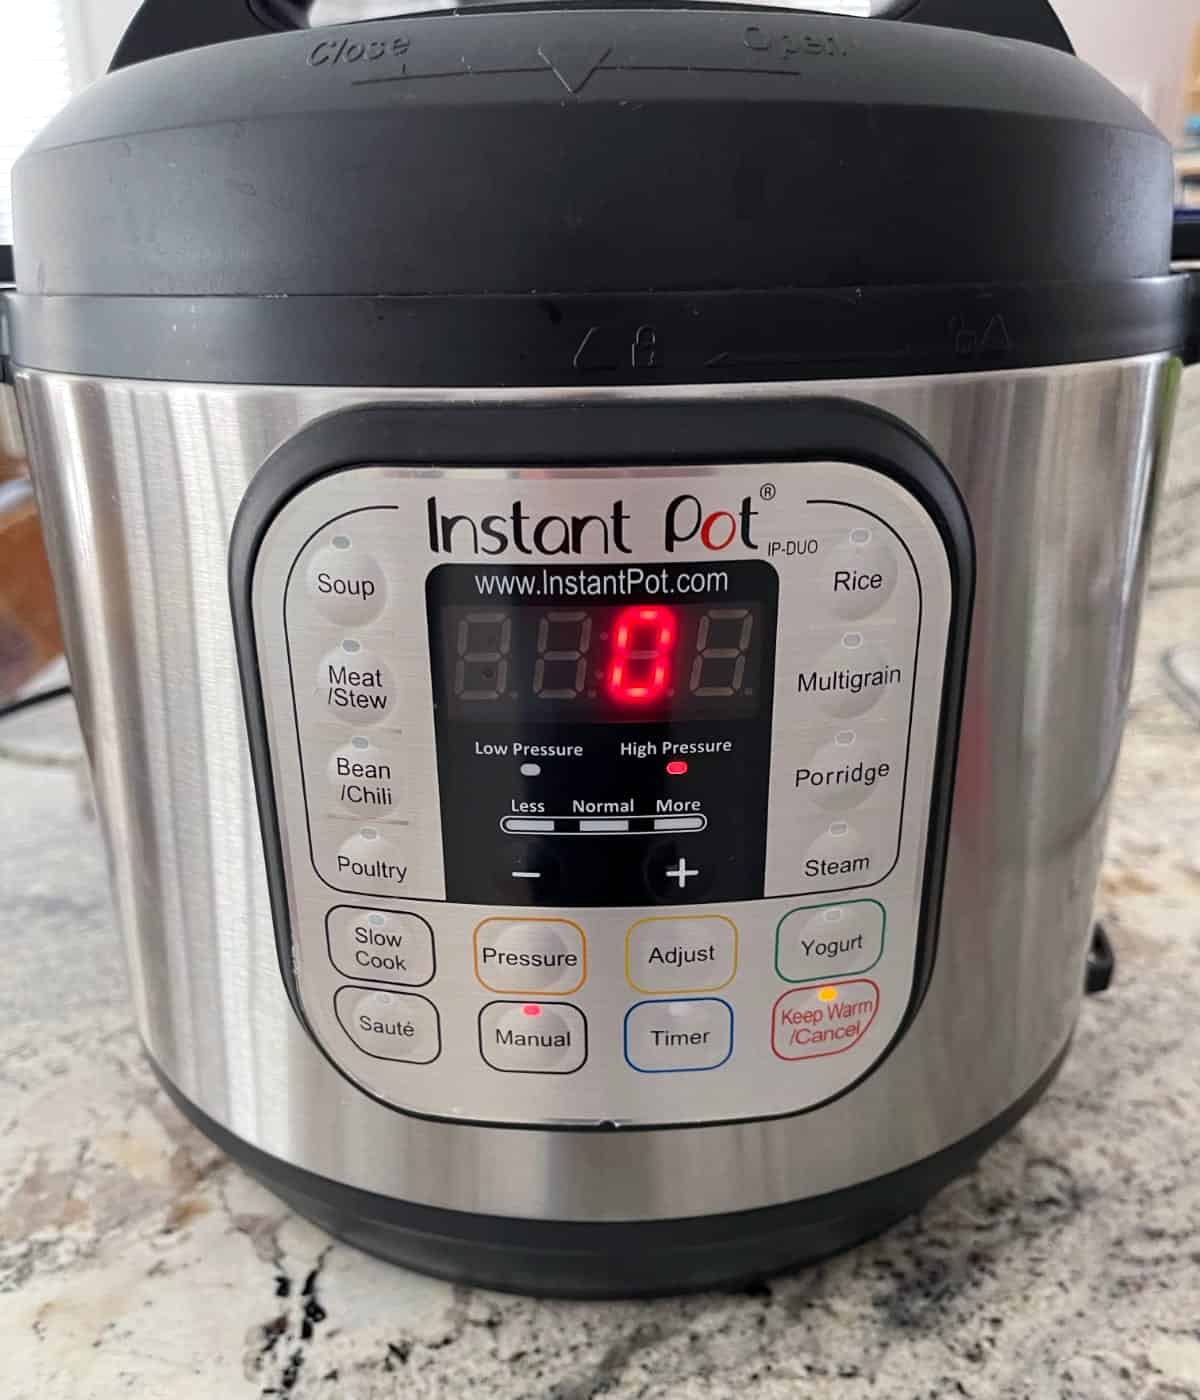 Instant pot set for 0 minutes on high pressure.